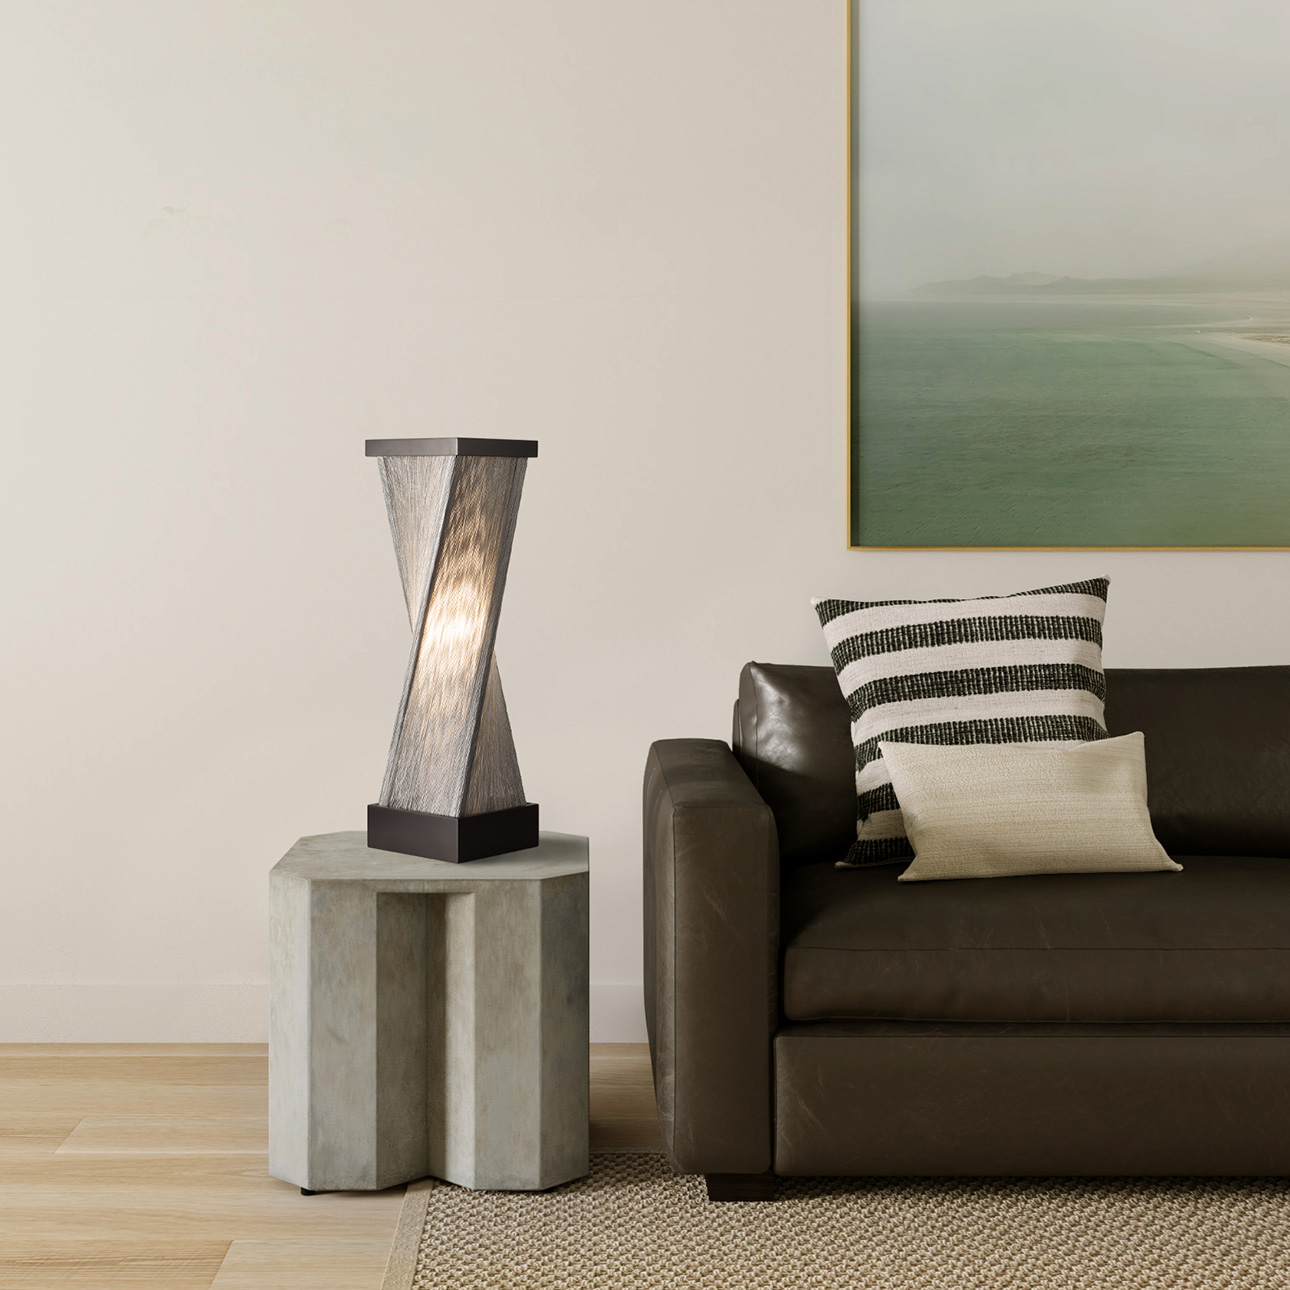 Torque 24″ Accent Table Lamp in Espresso and Satin Nickel with Online SwitchTorque 54″ Accent Floor Lamp in Espresso and Silver String with Dimmer Switch